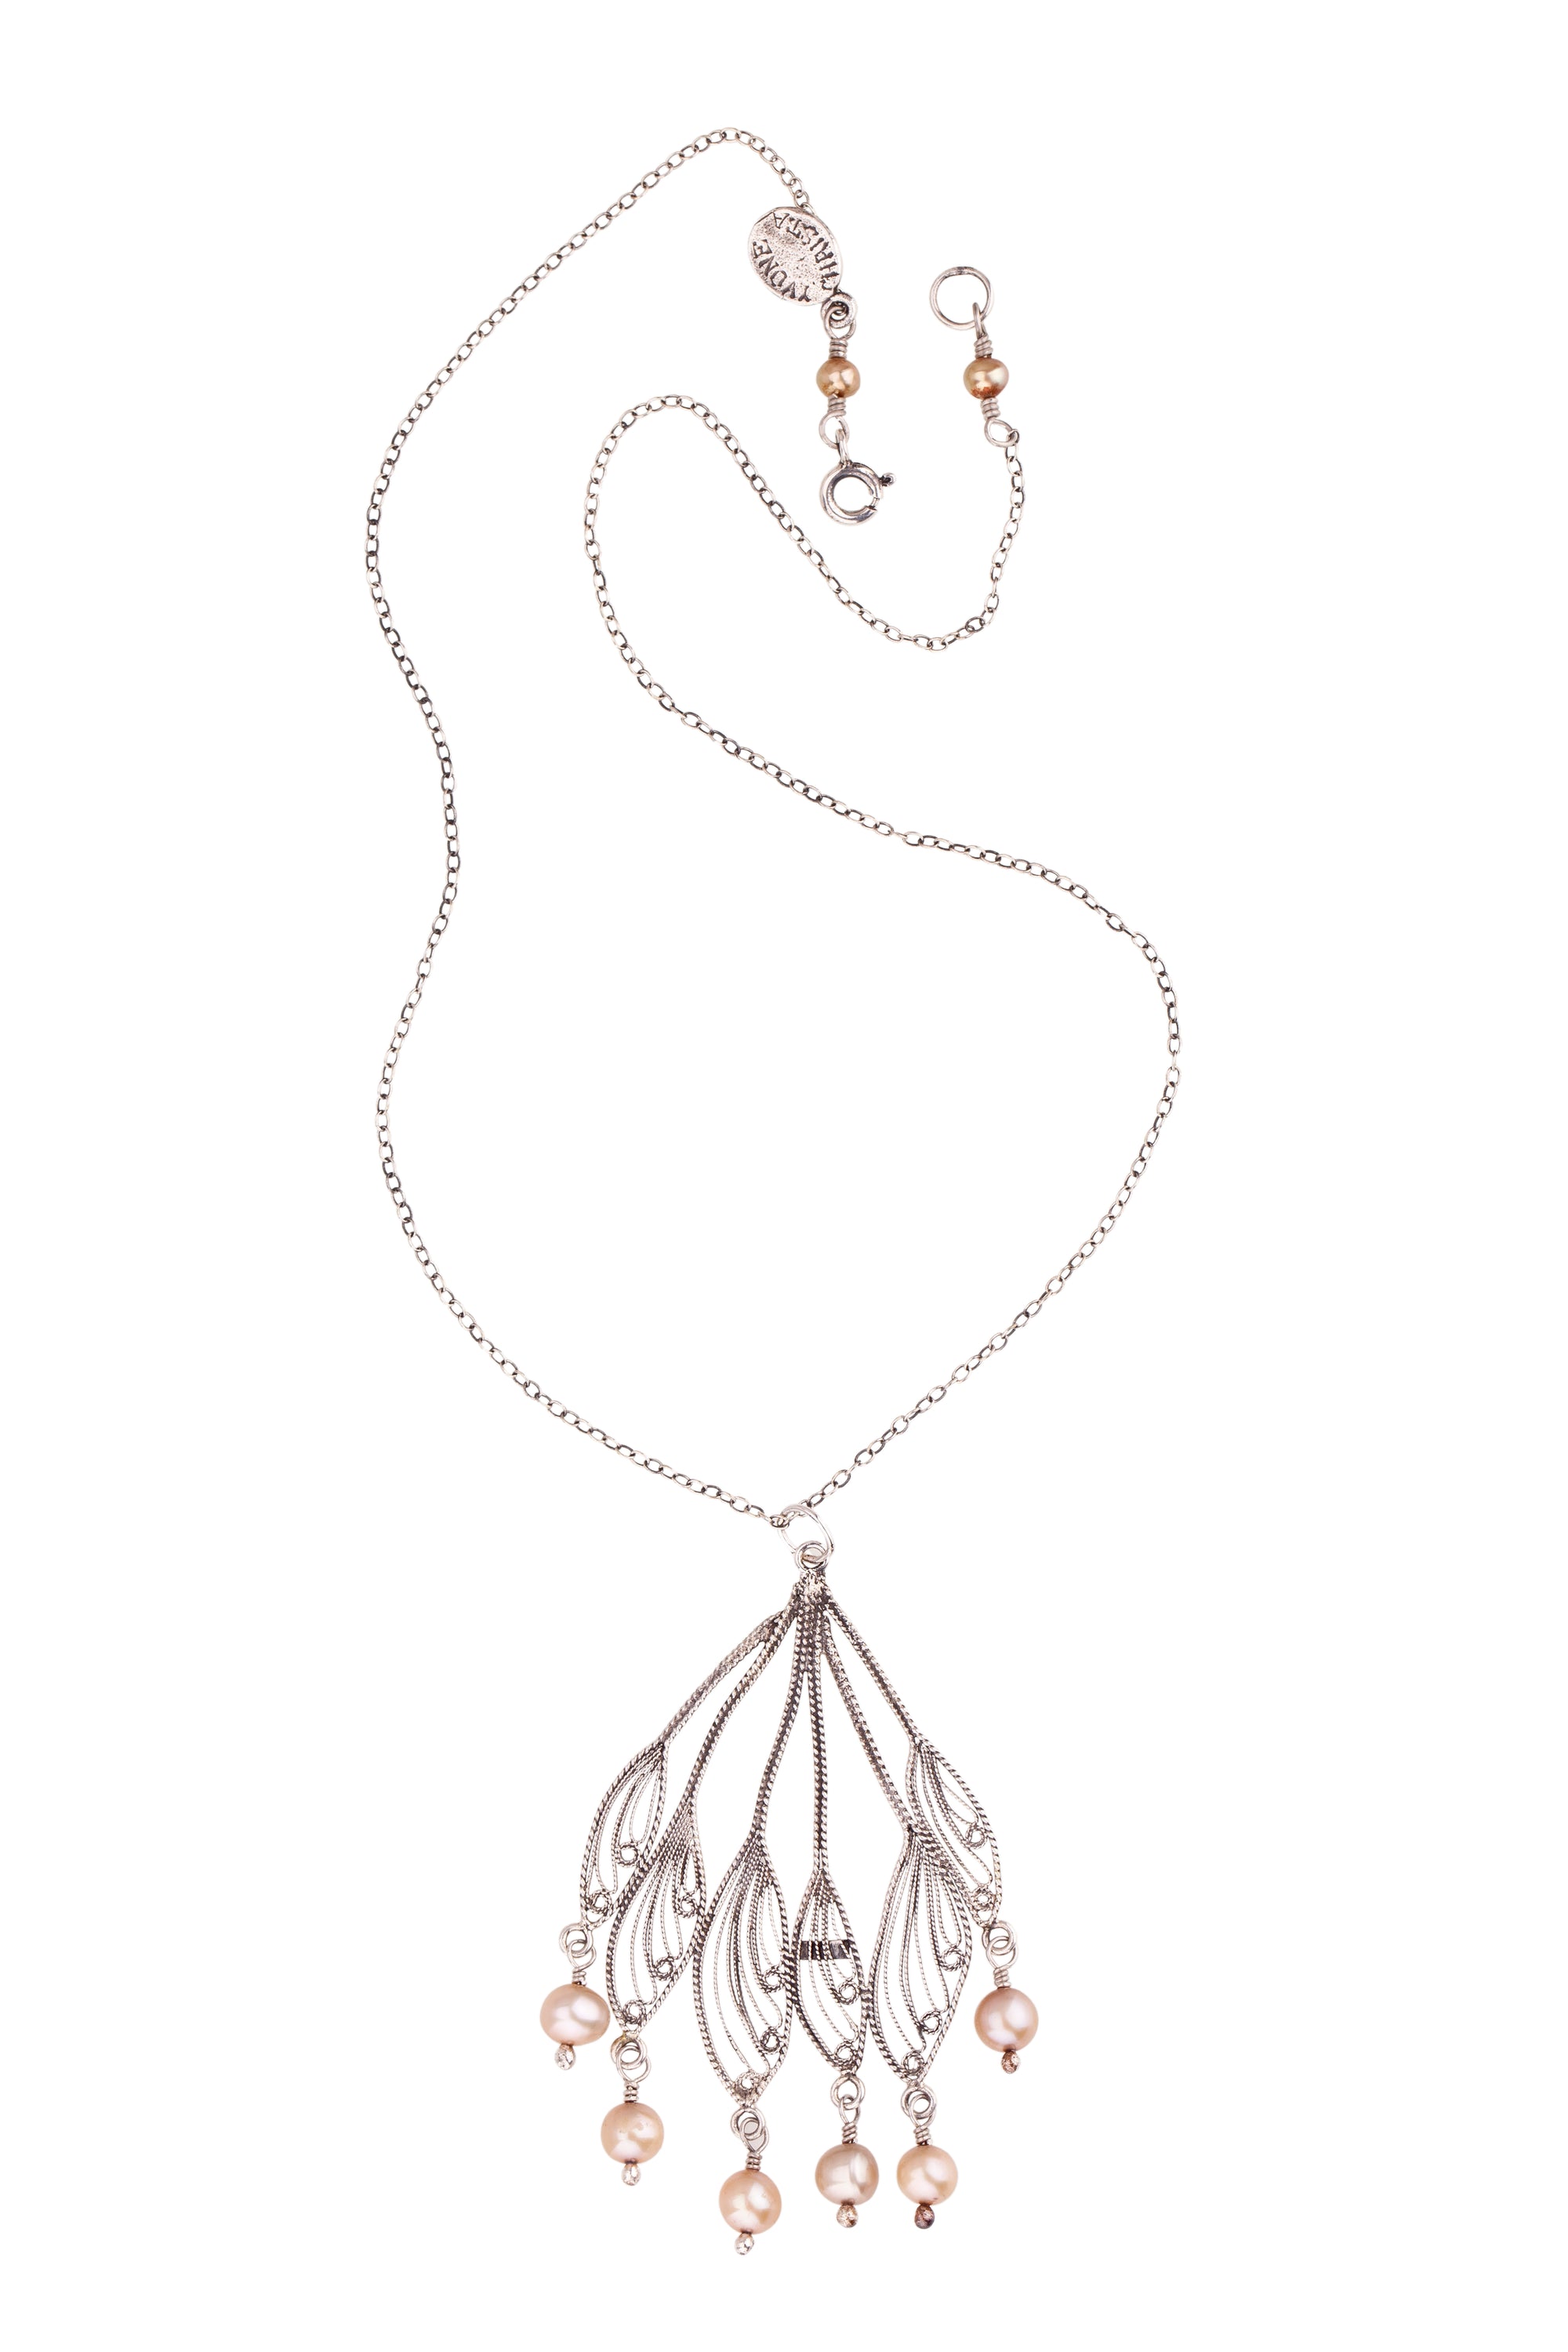 Magnolia Moonlight Necklace